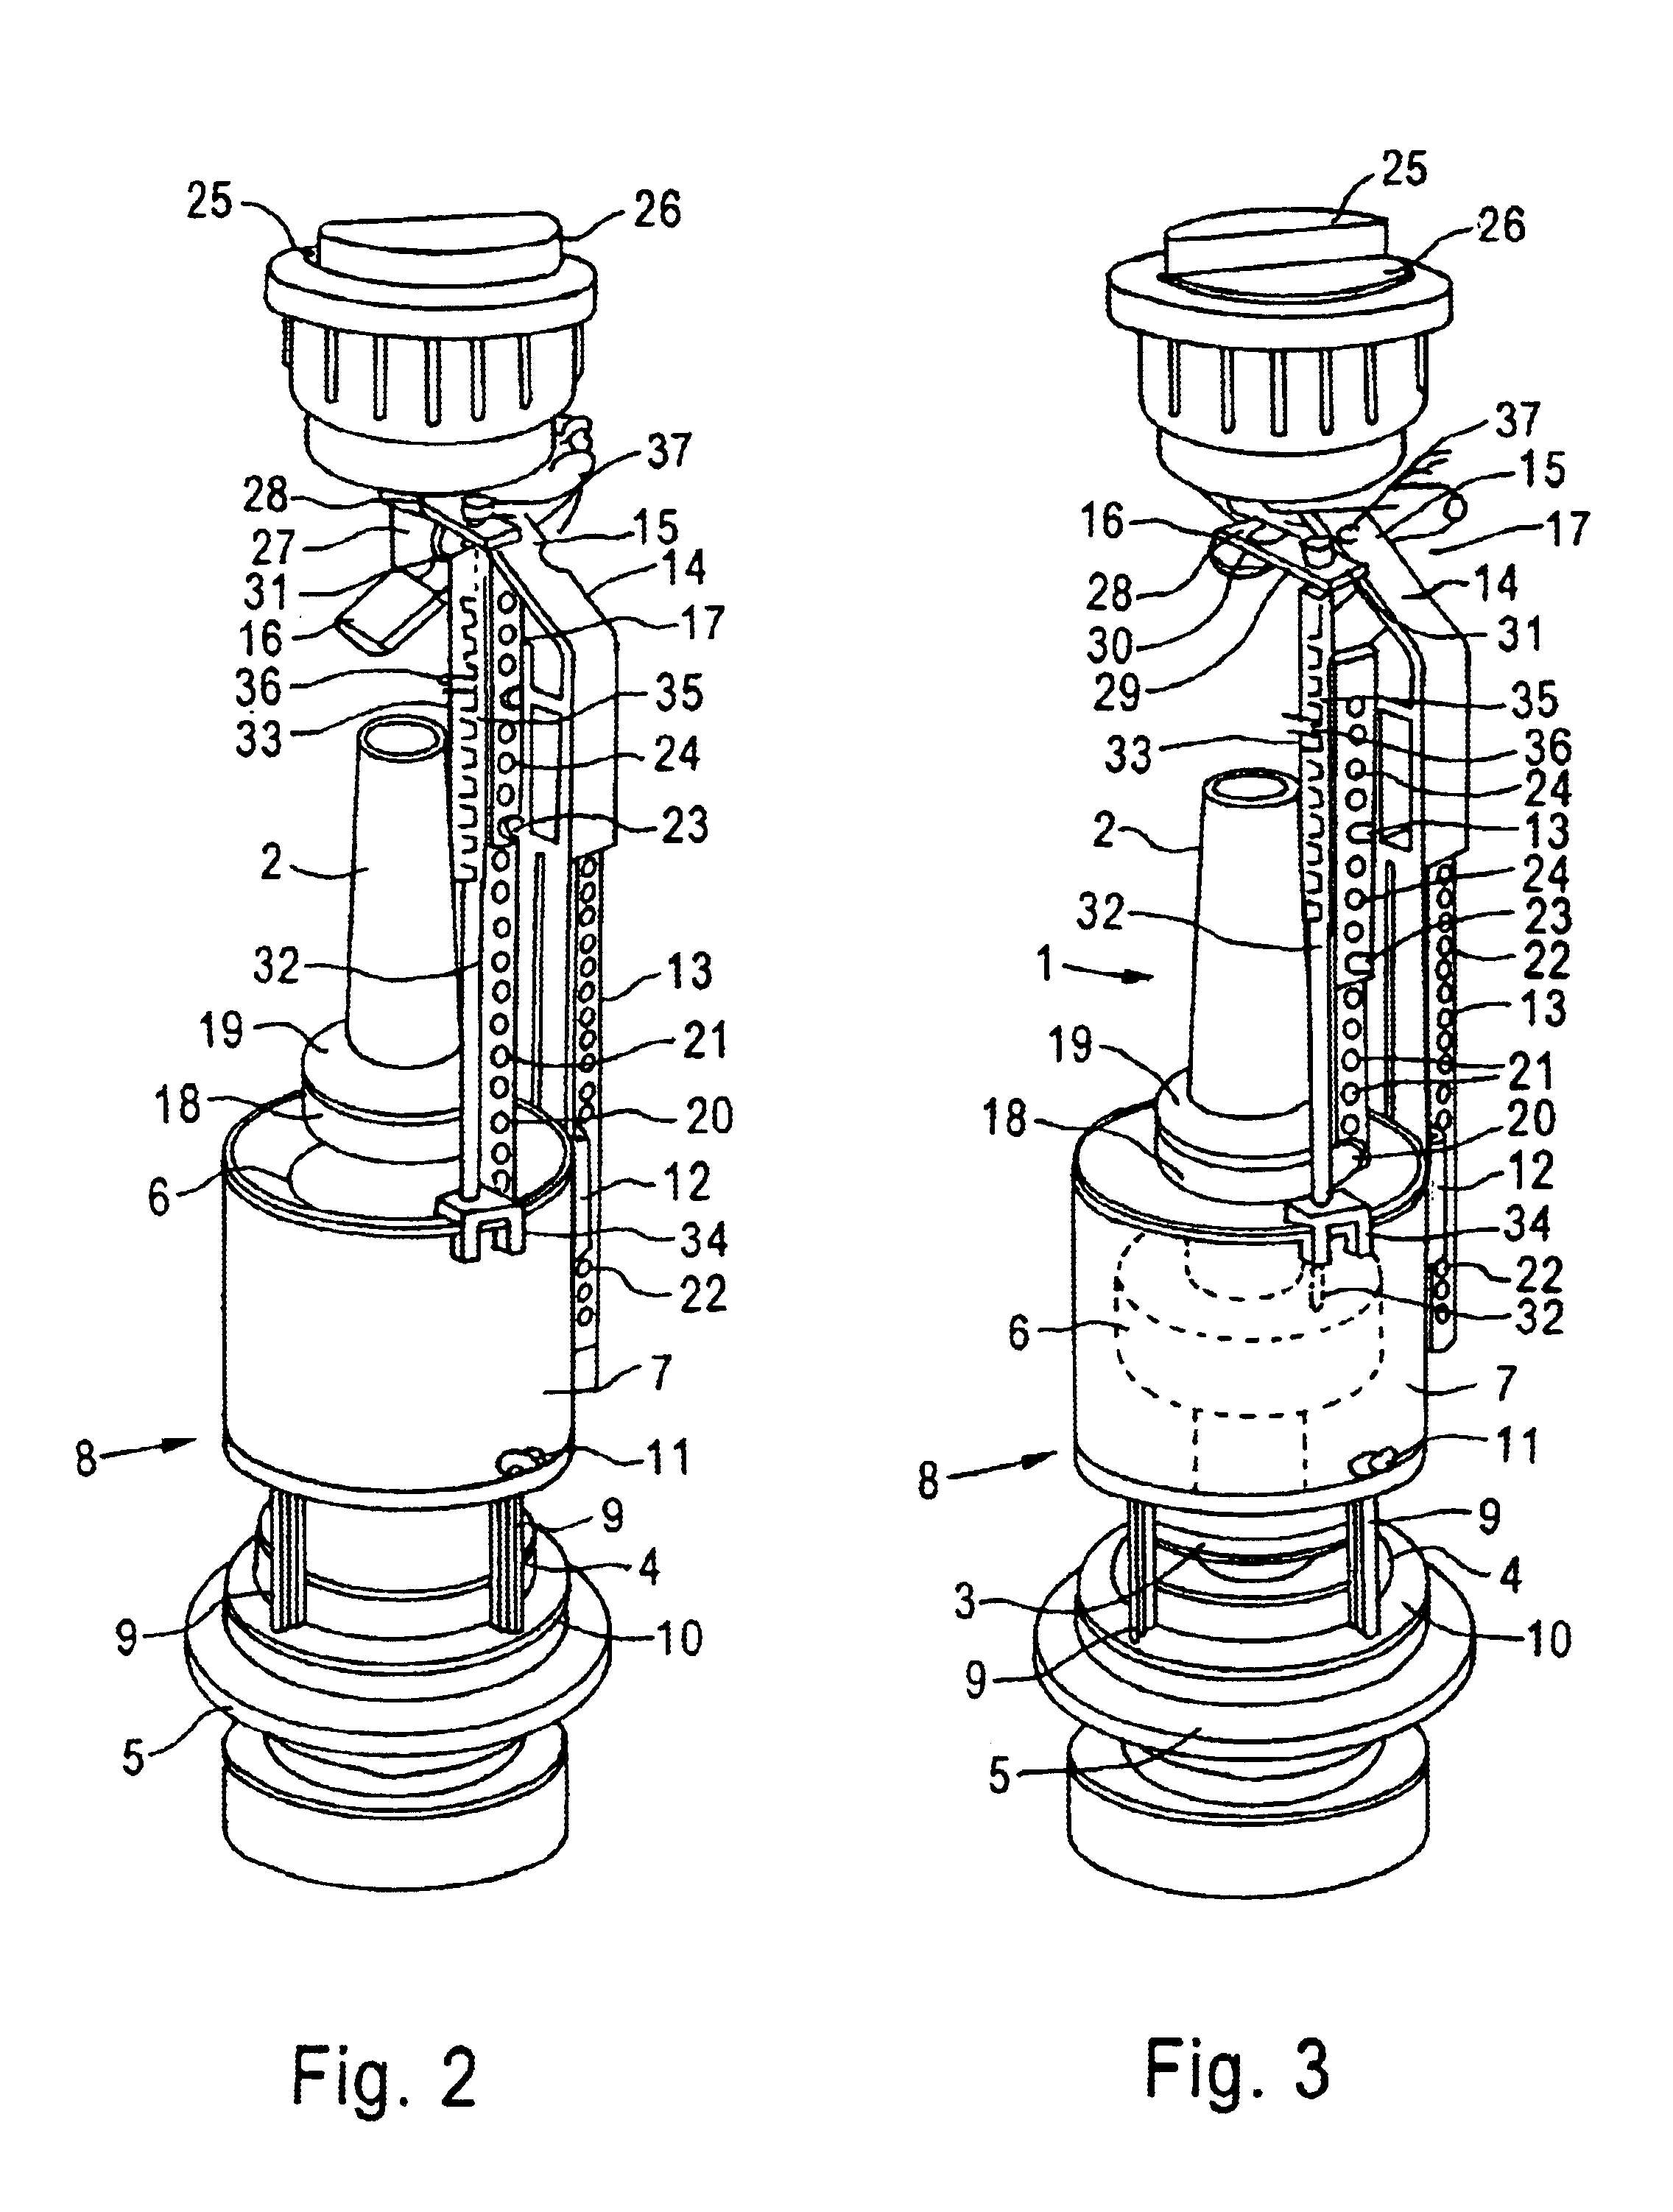 Flushing mechanism for a dual flush cistern